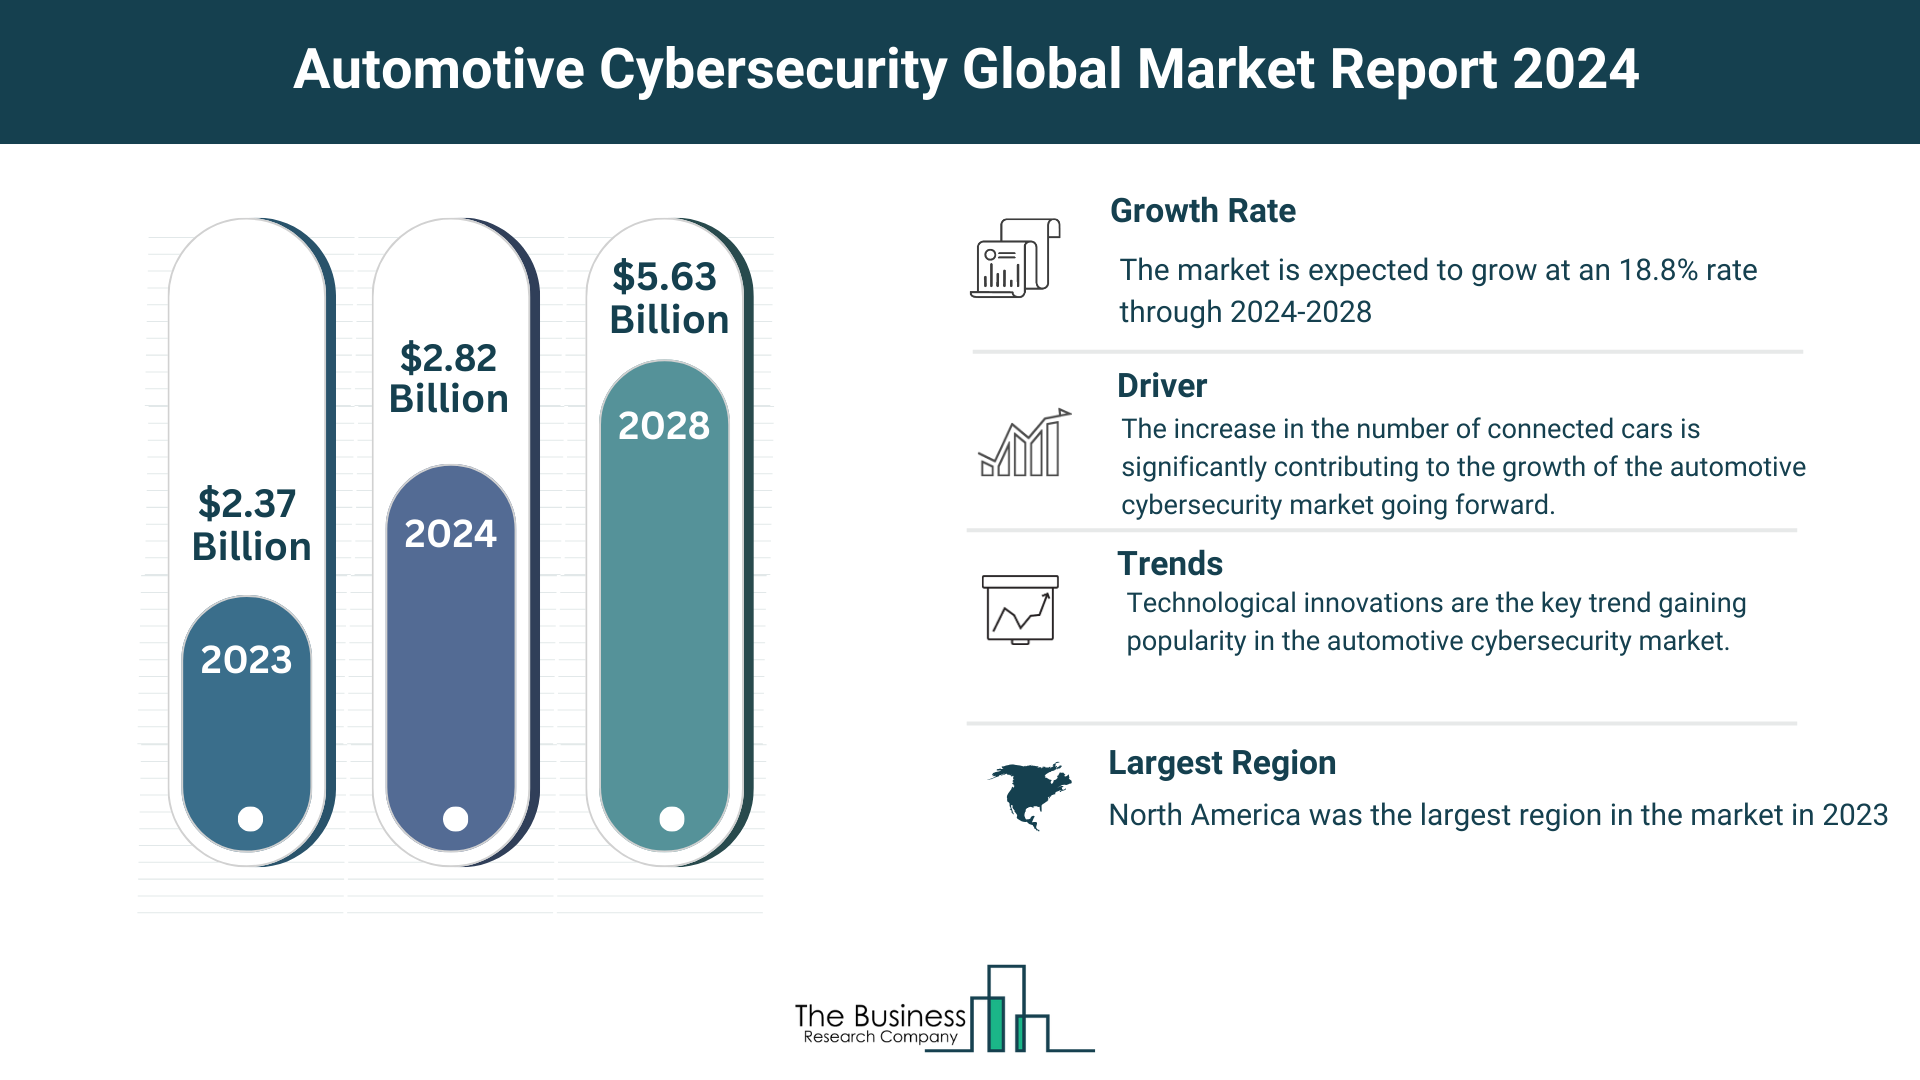 Global Automotive Cybersecurity Market